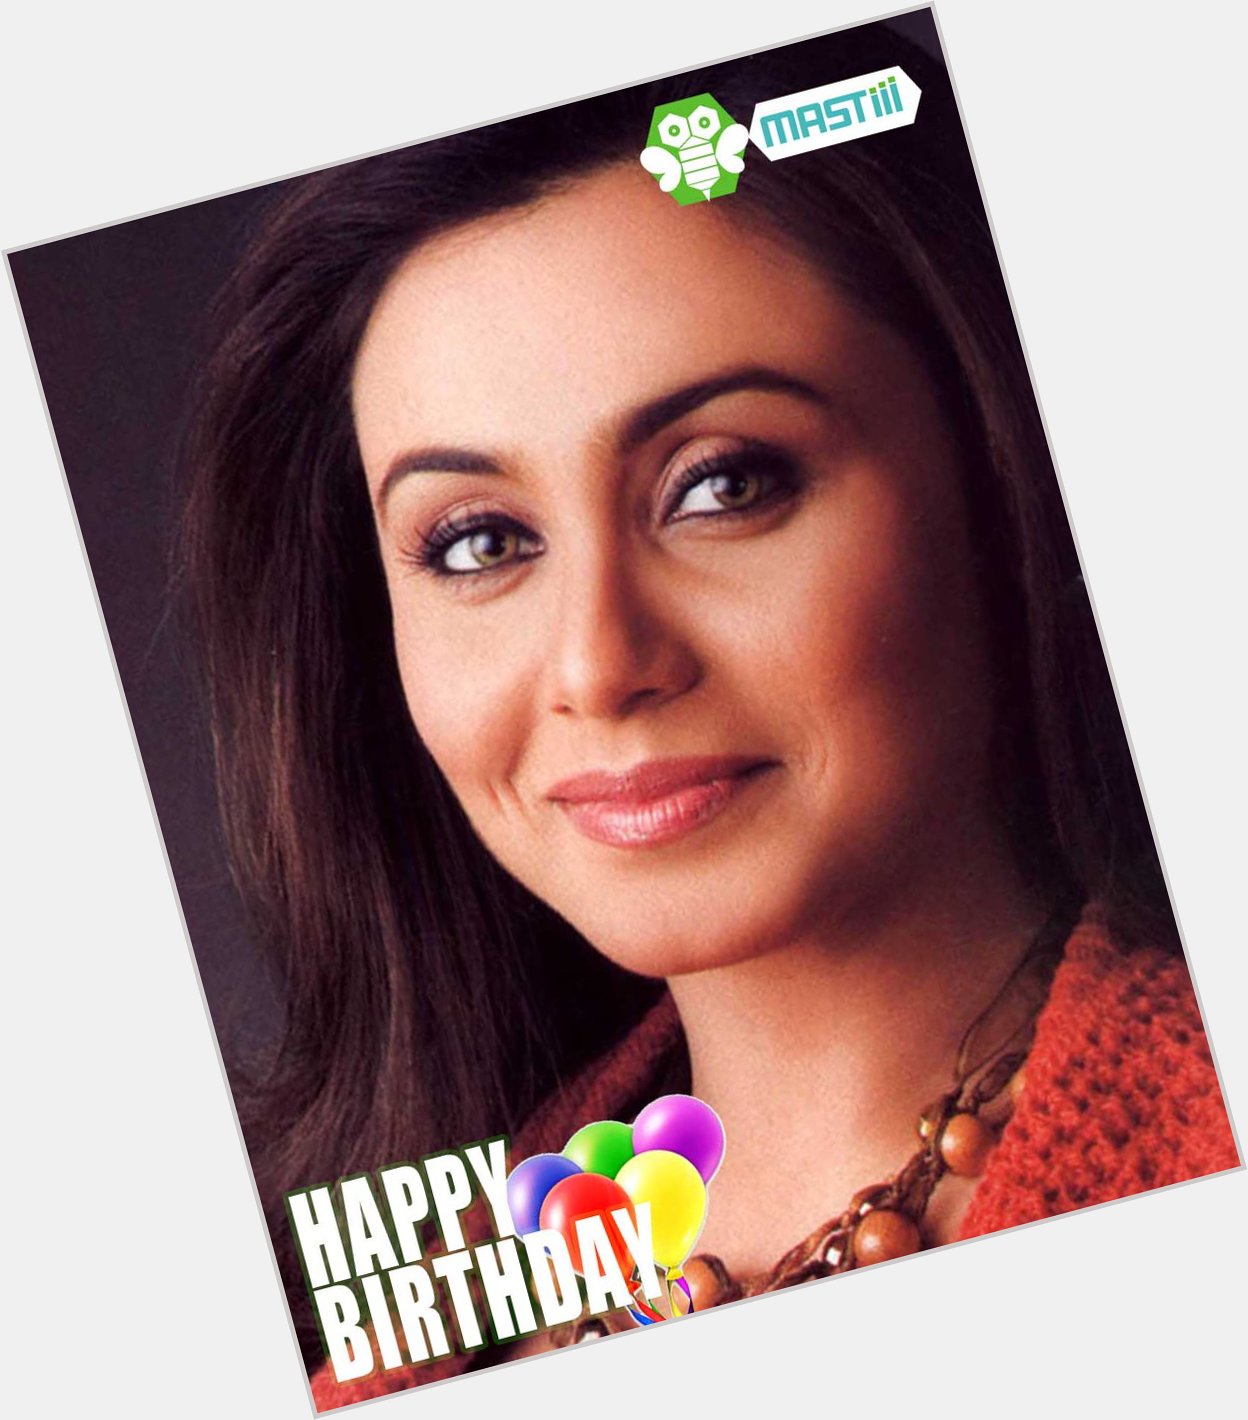 Mastiii wishes Rani Mukerji, a very Happy Birthday! 